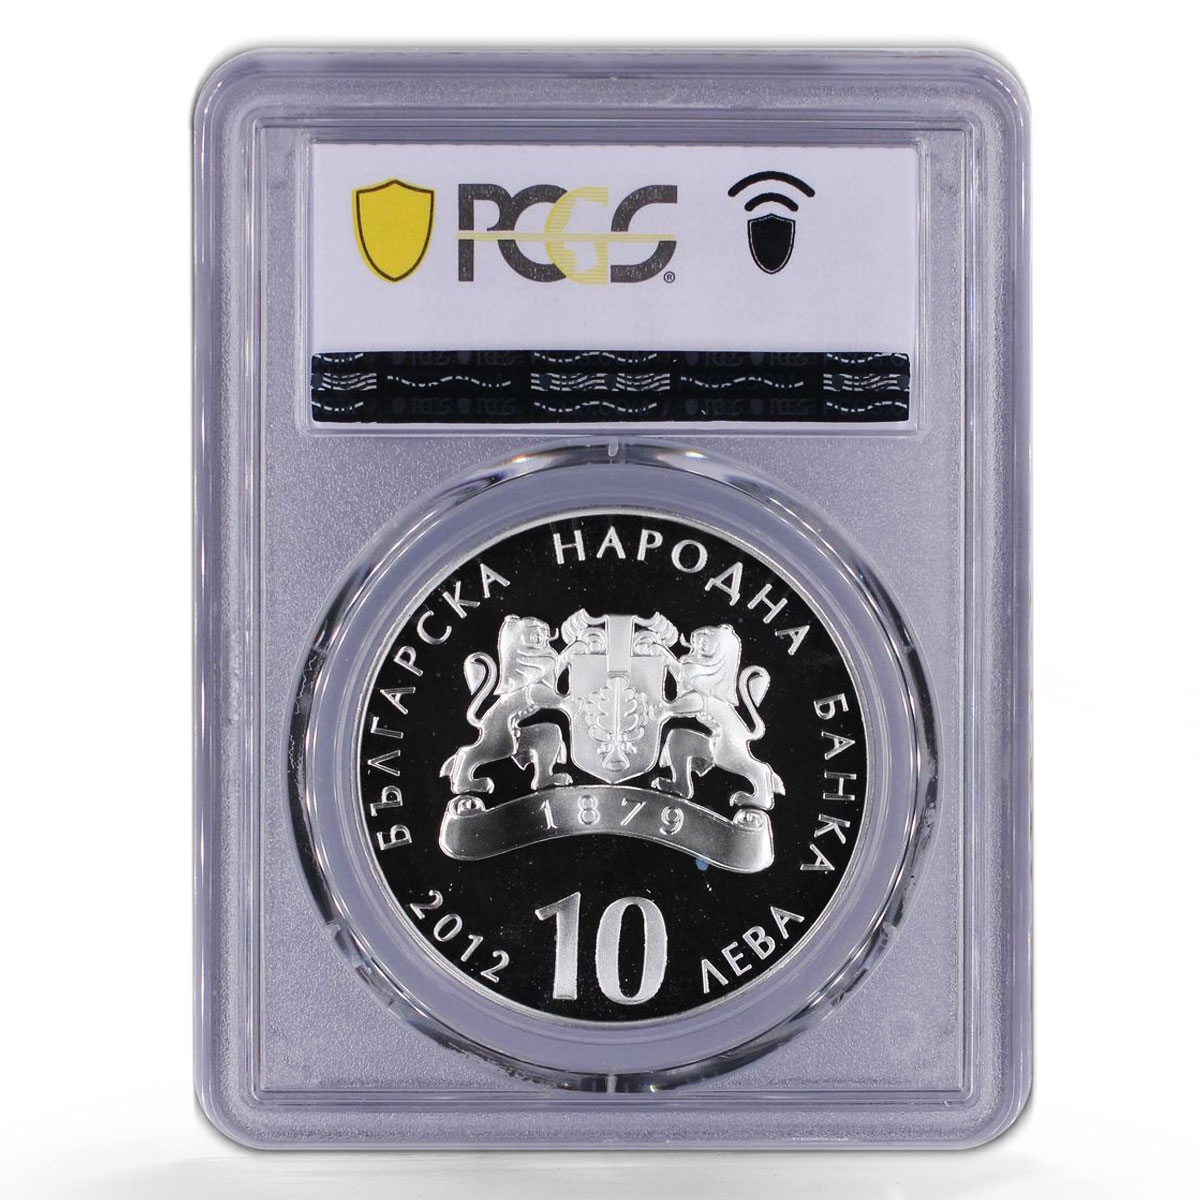 Bulgaria 10 leva Chudnite Mostove Wonderful Brideges PR68 PCGS silver coin 2012